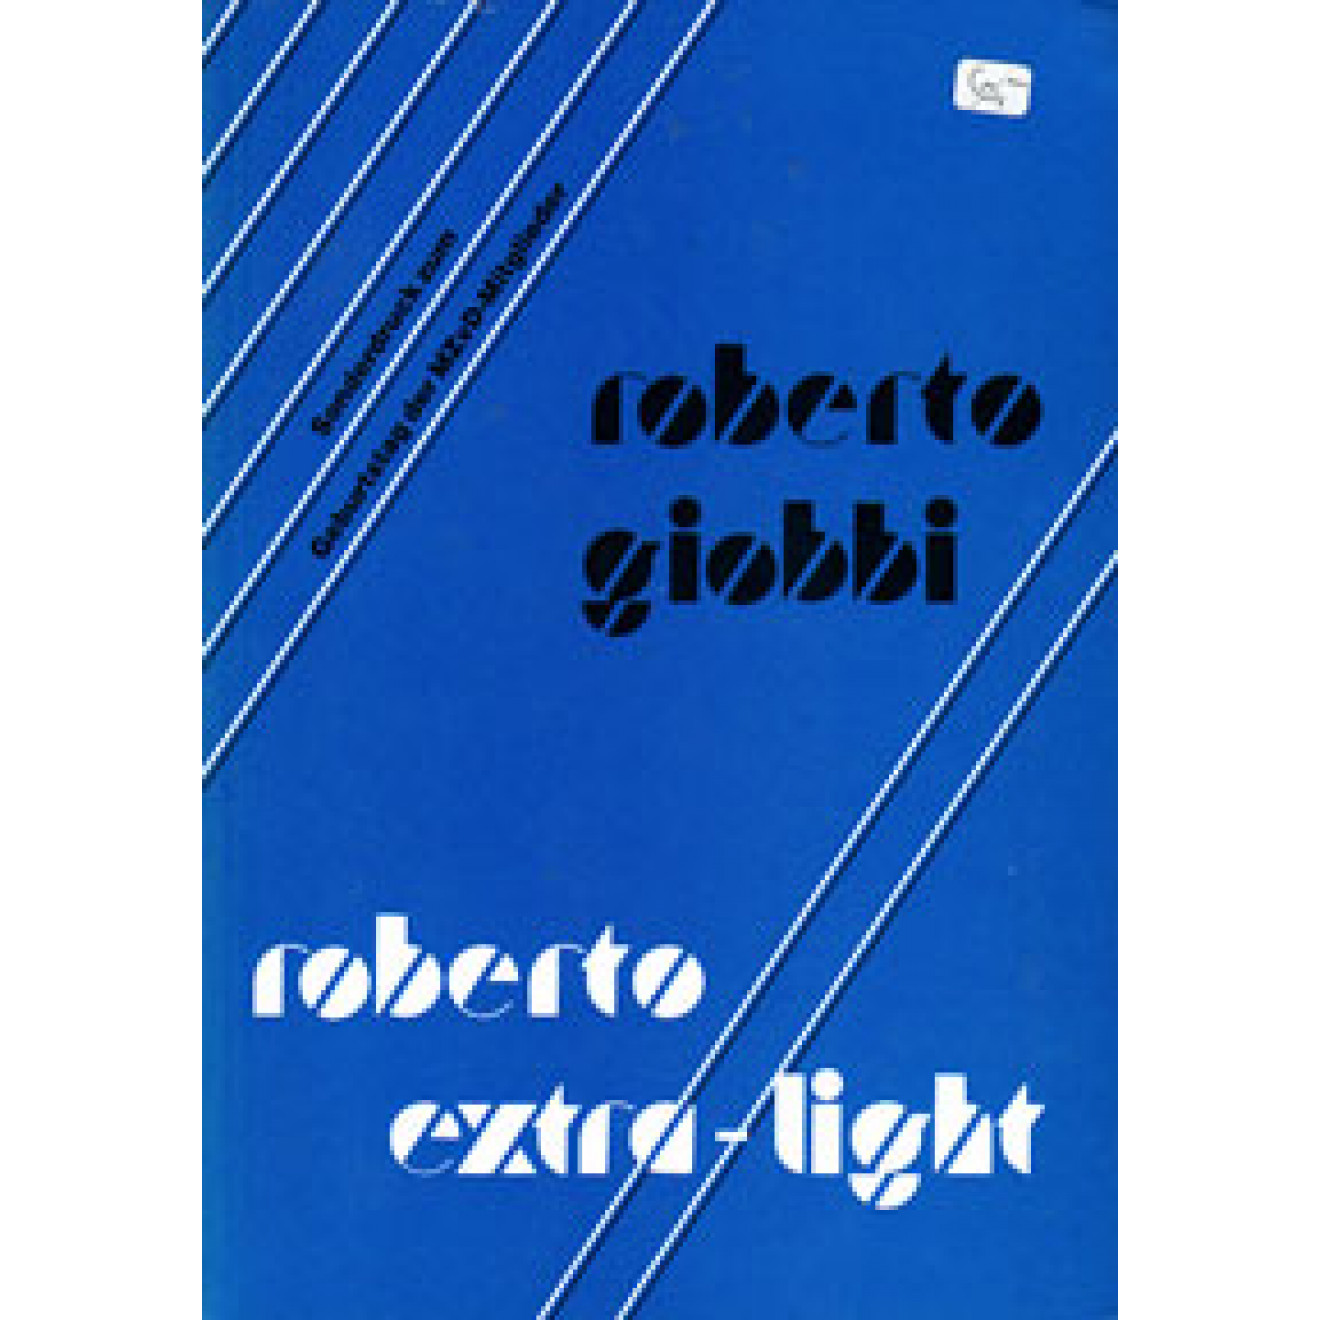 Roberto Extra-Light